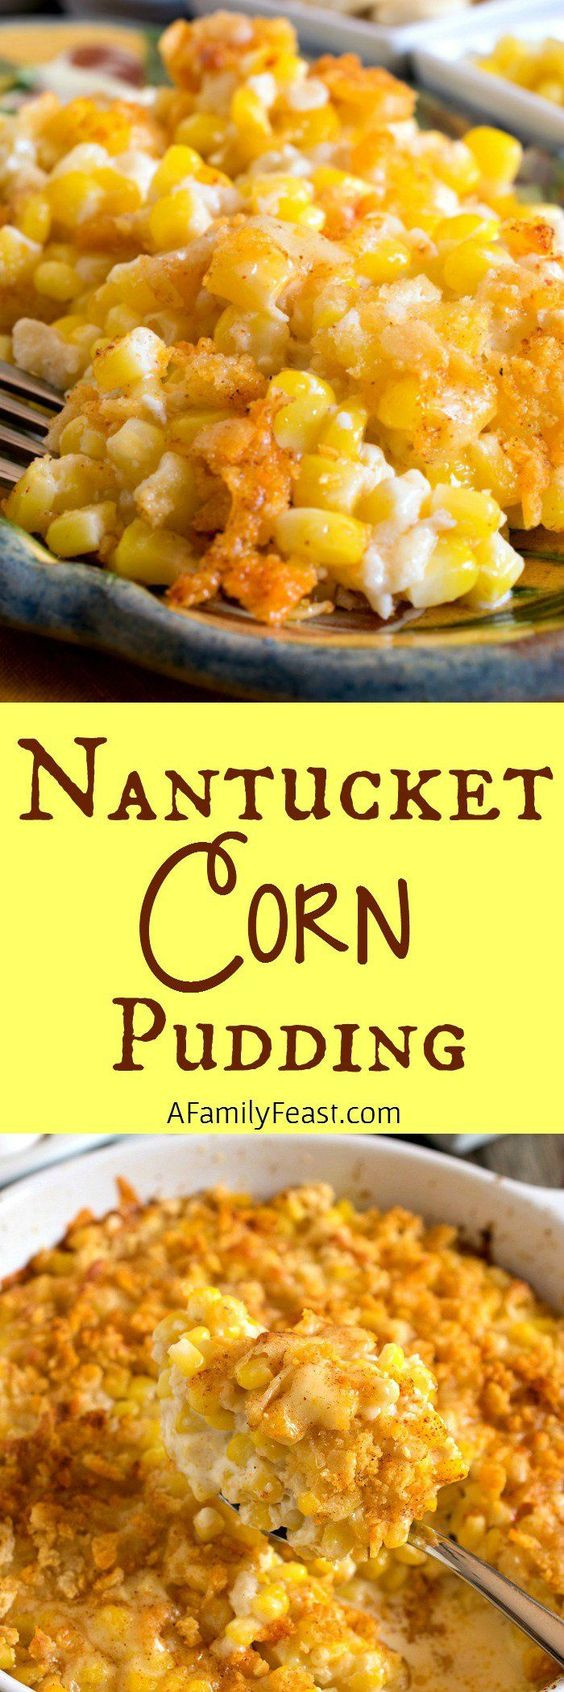 Thanksgiving Corn Side Dishes
 Nantucket Corn Pudding Recipe